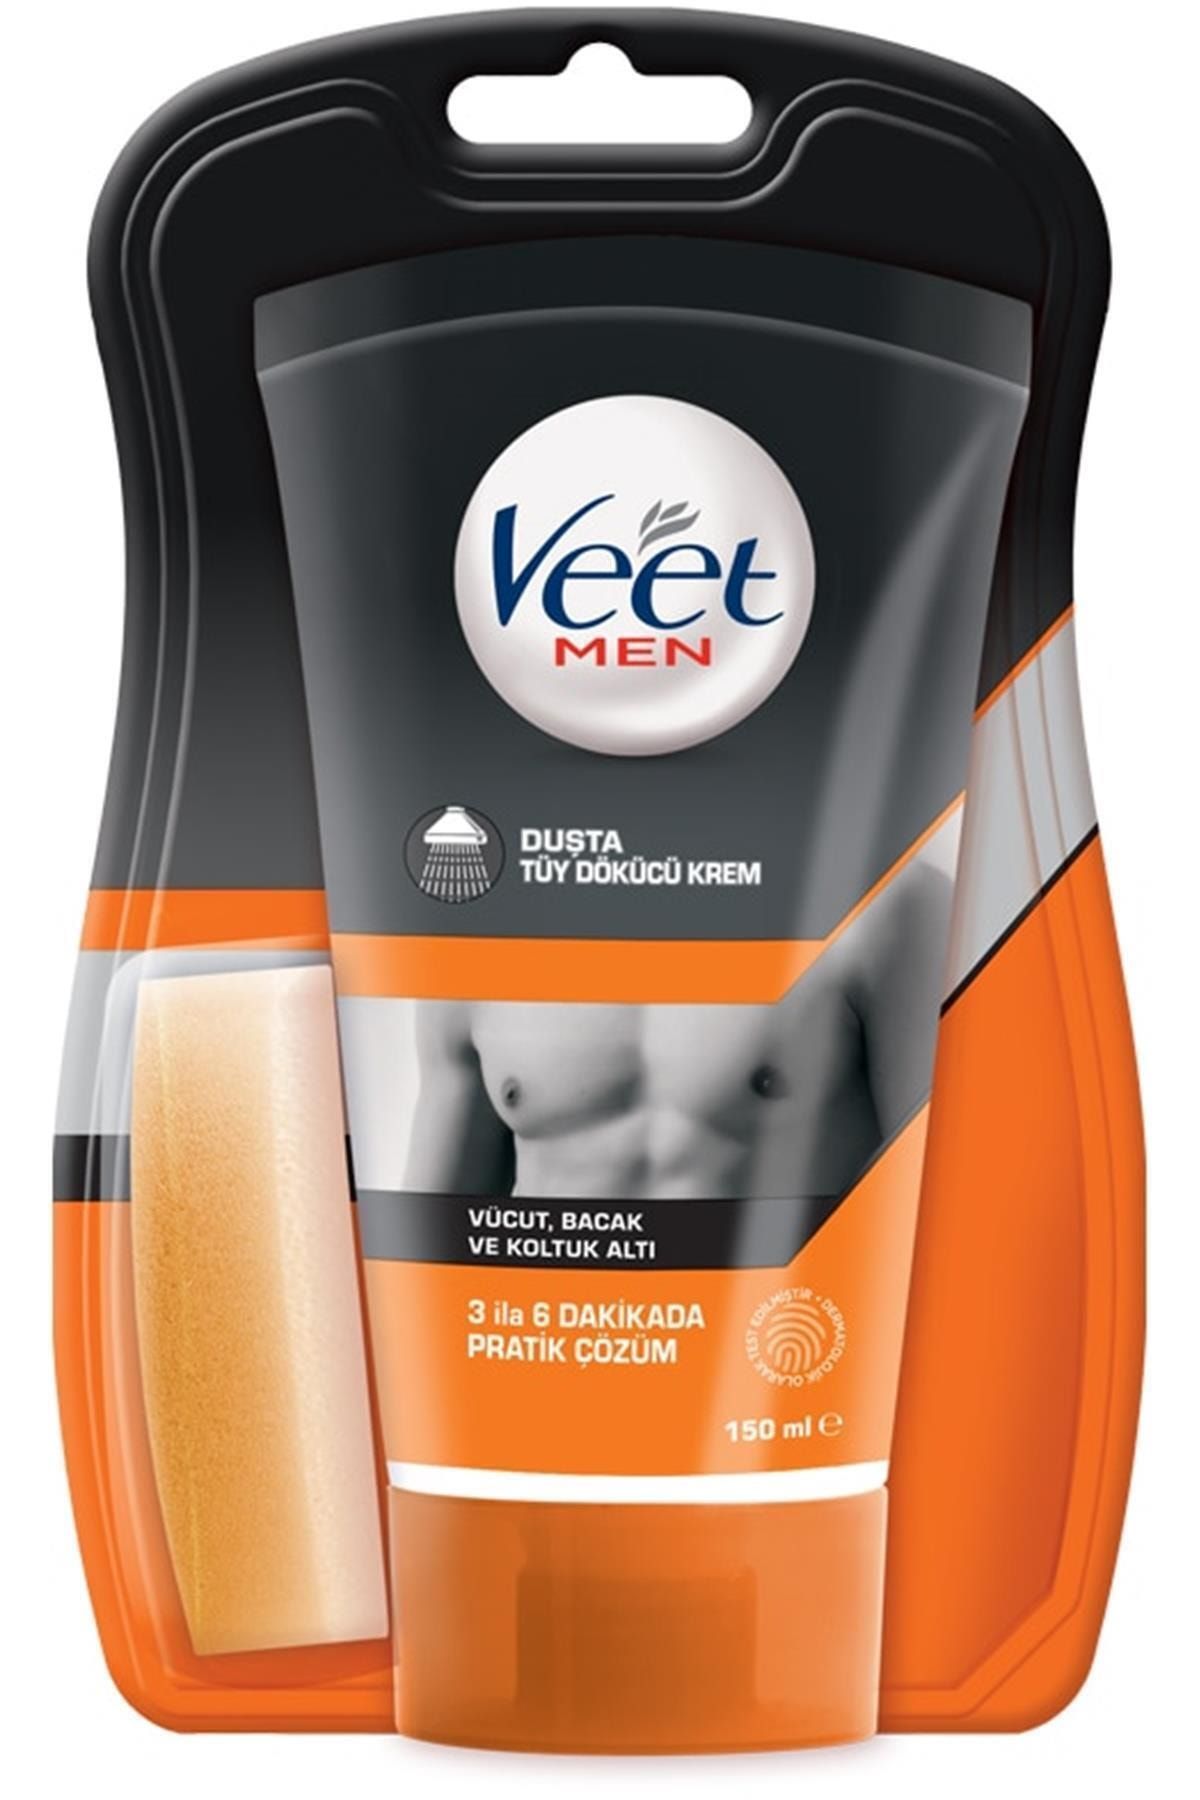 Veet Marka: Men Duşta Tüy Dökücü Krem 150 Ml Kategori: Saç Vitamini